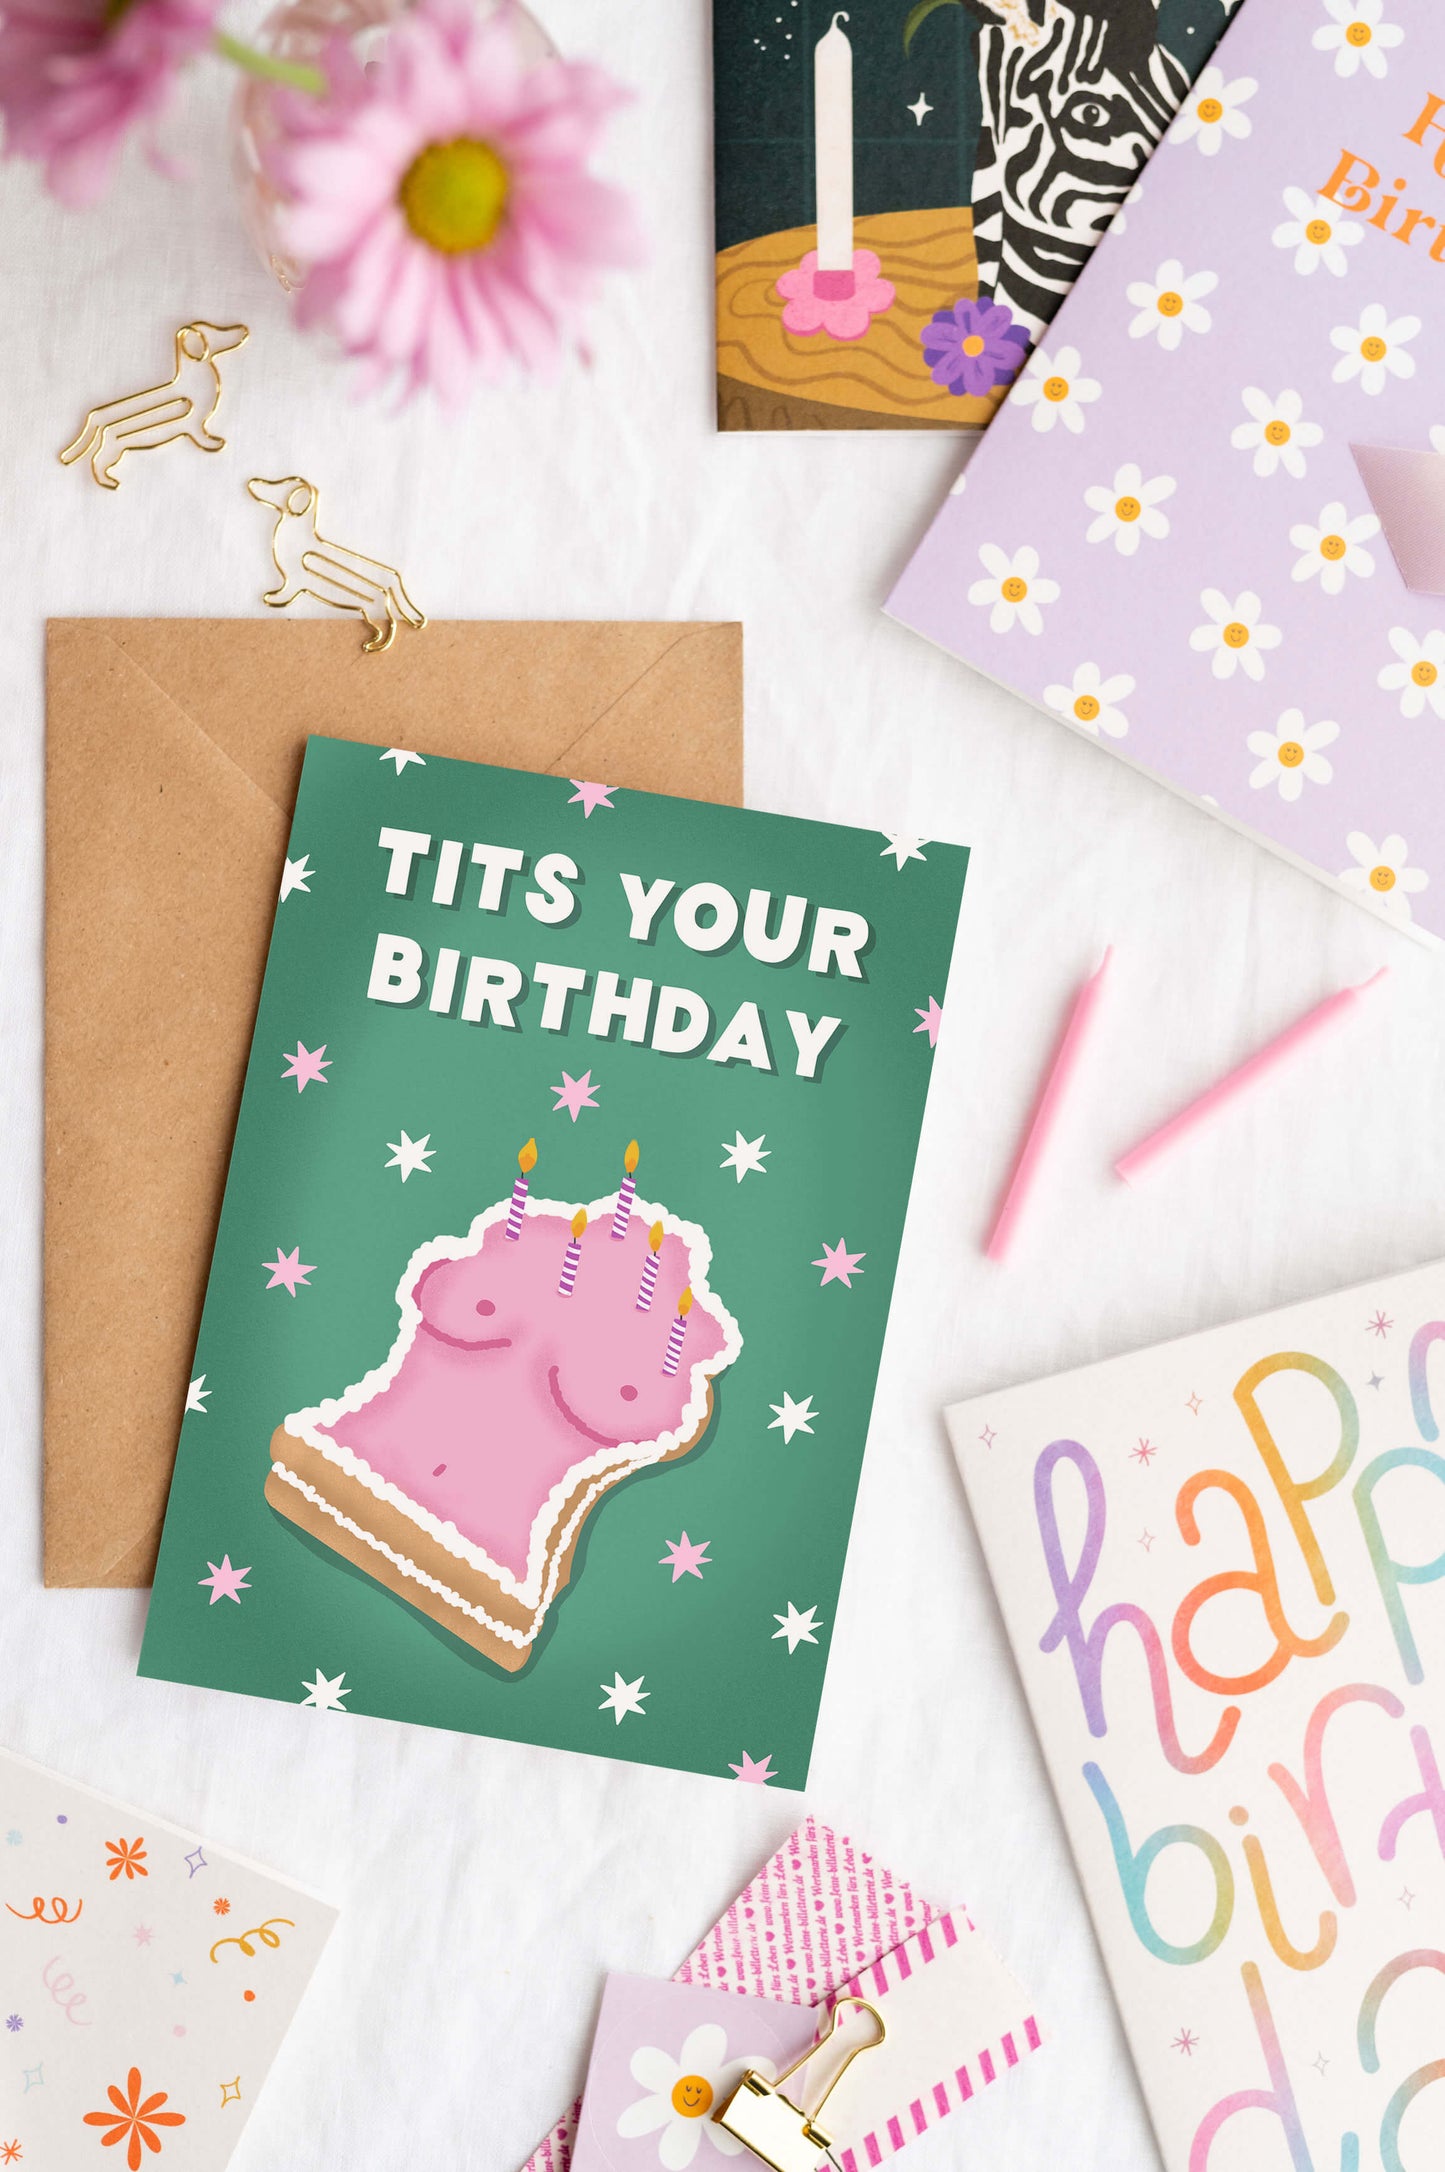 Tits Your Birthday Card | Funny Birthday Cards | Boob Cards